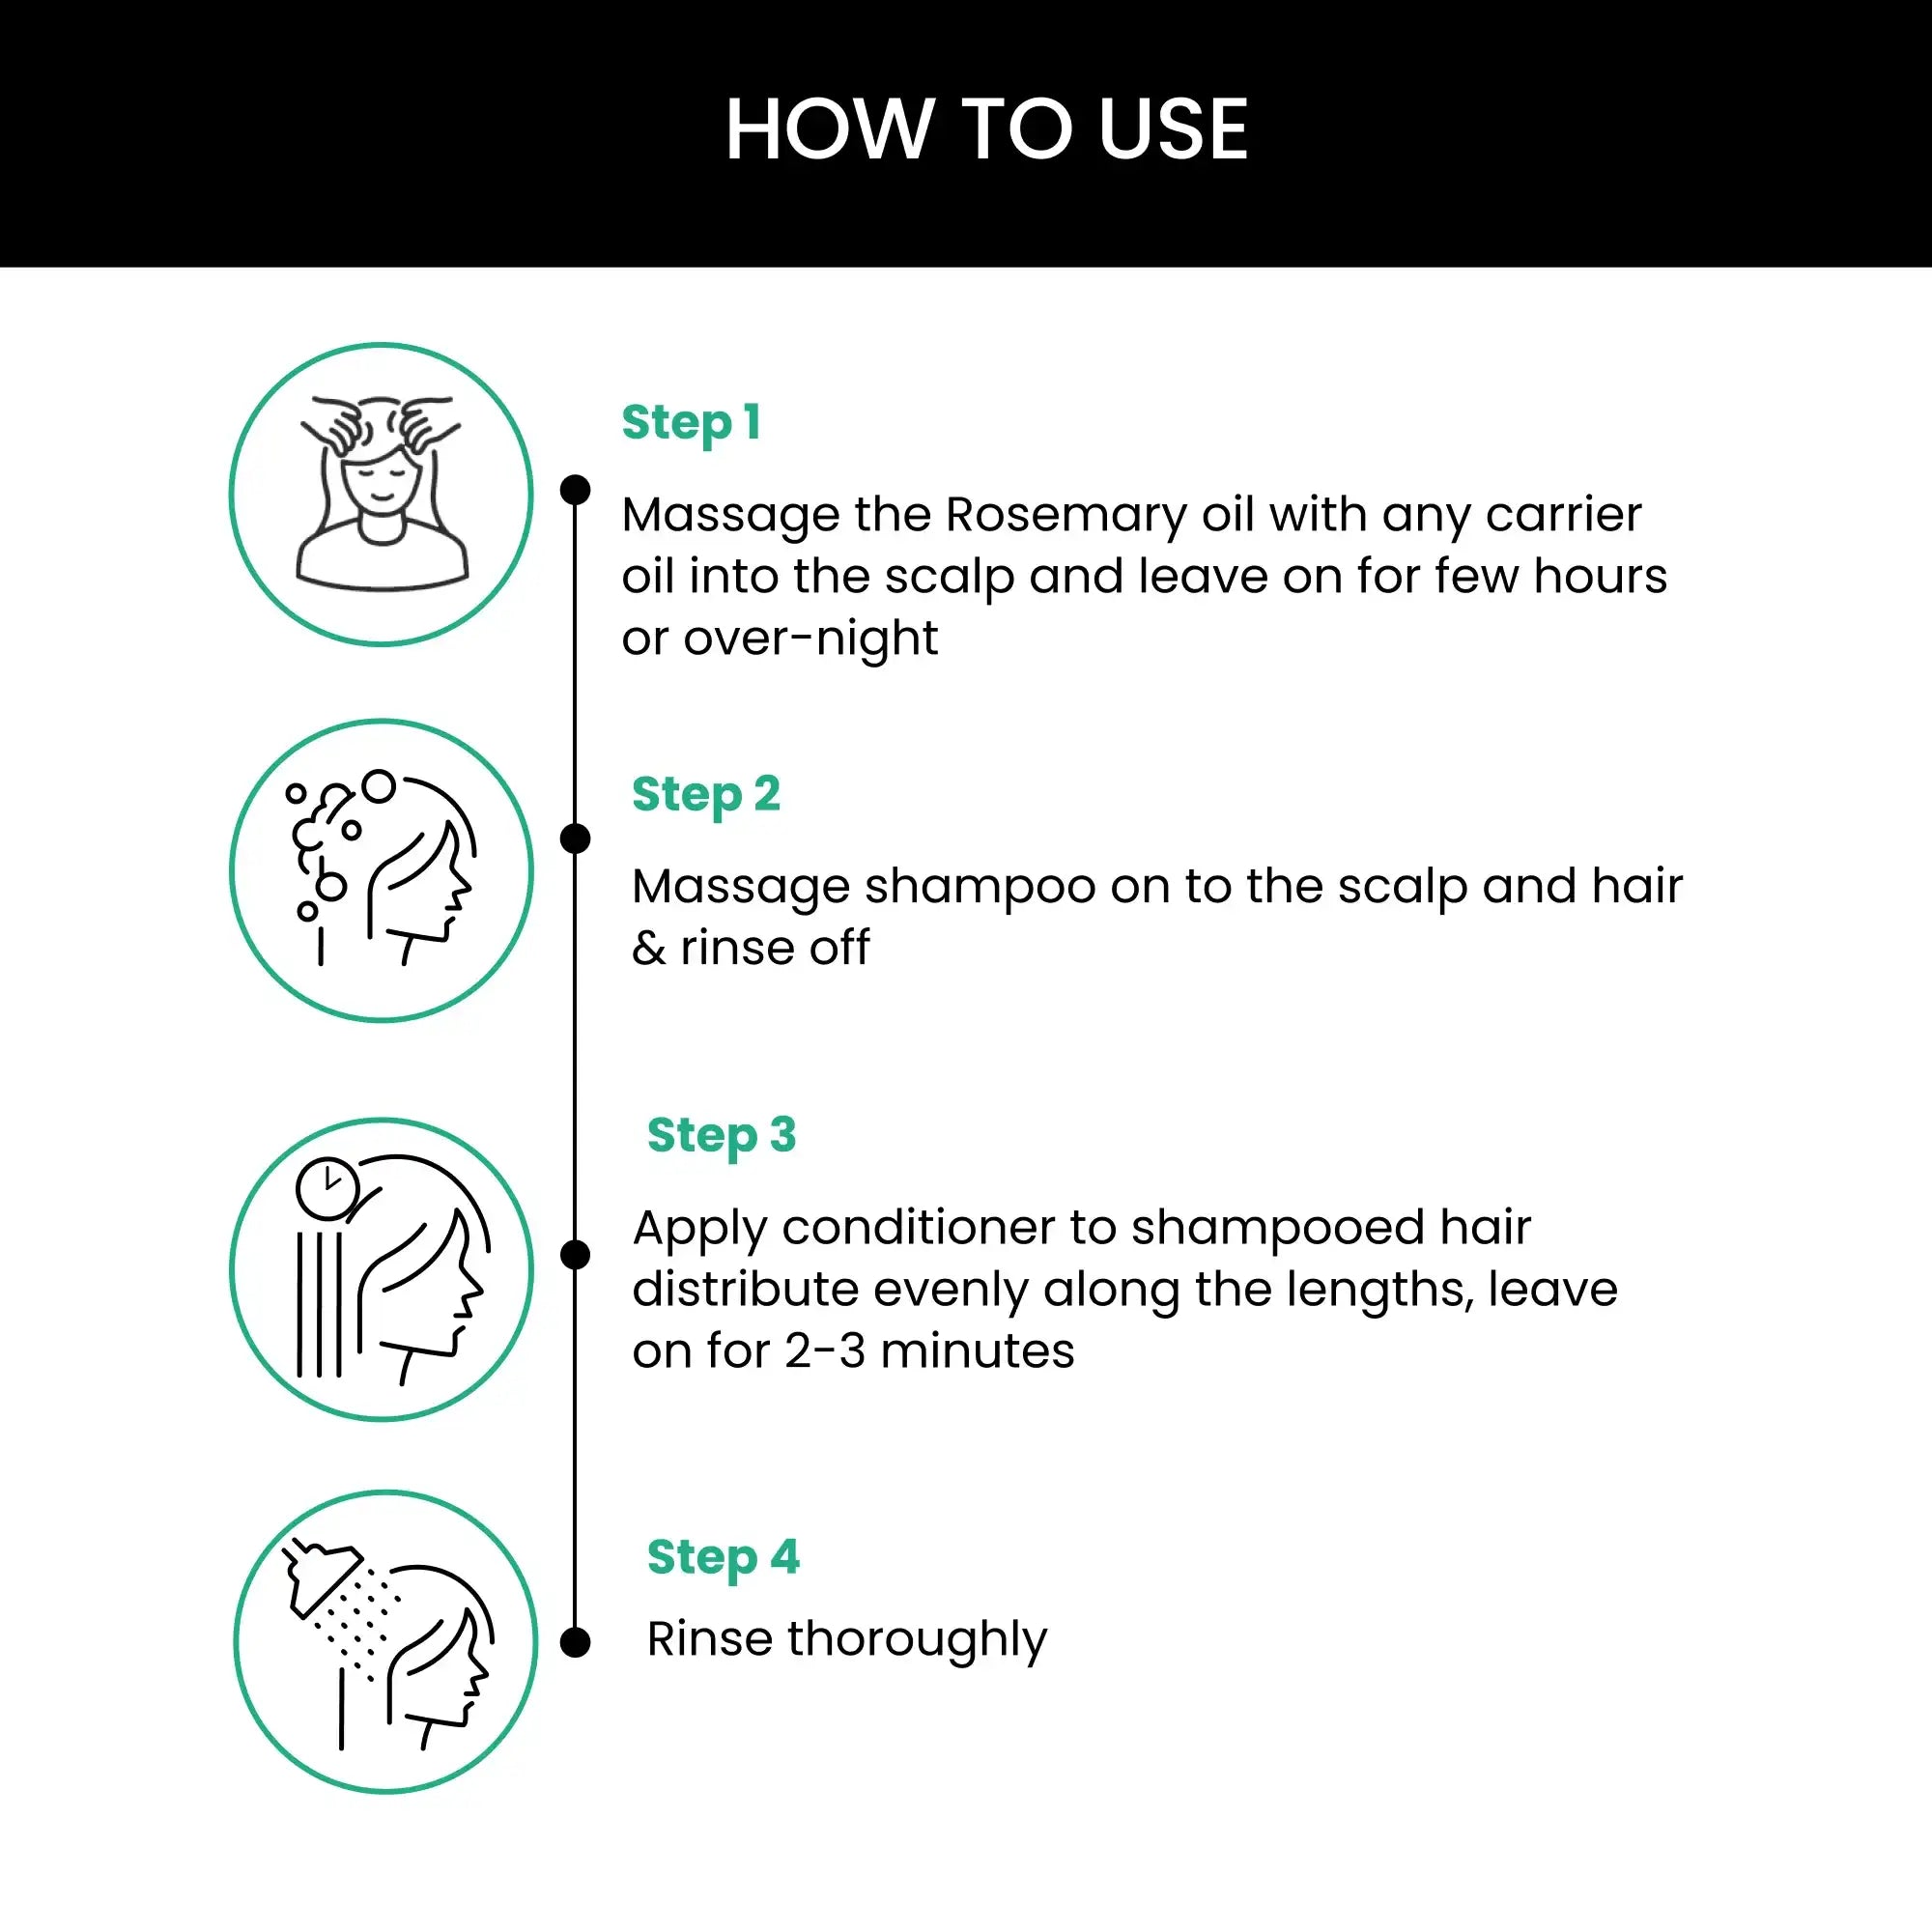 how to use rosemary hair kit